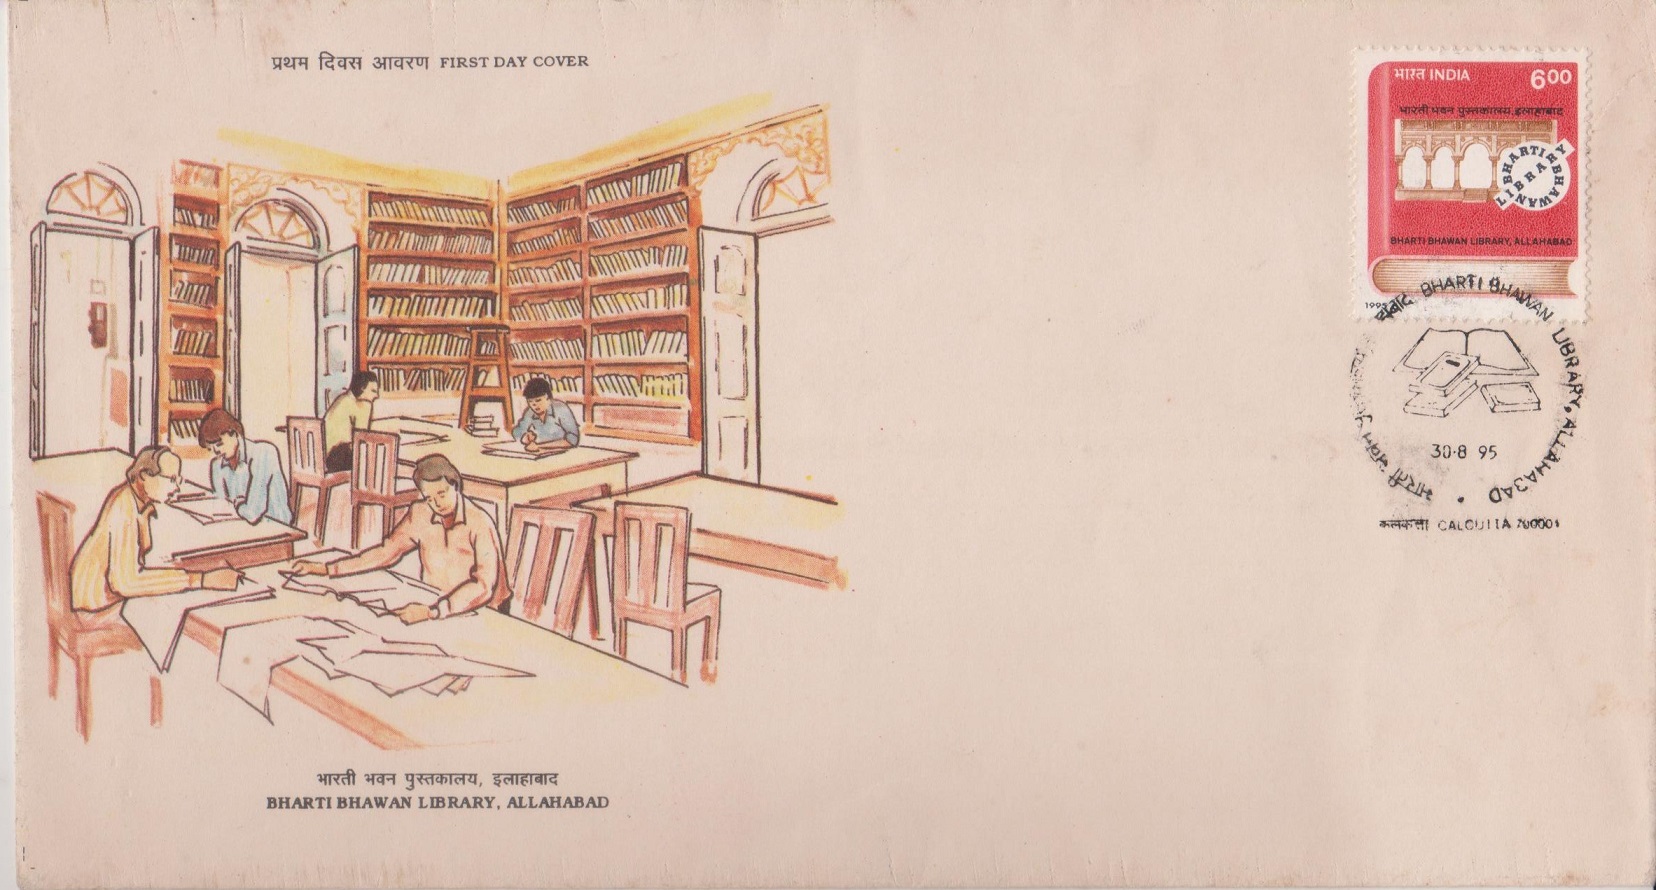  Bharti Bhawan Library